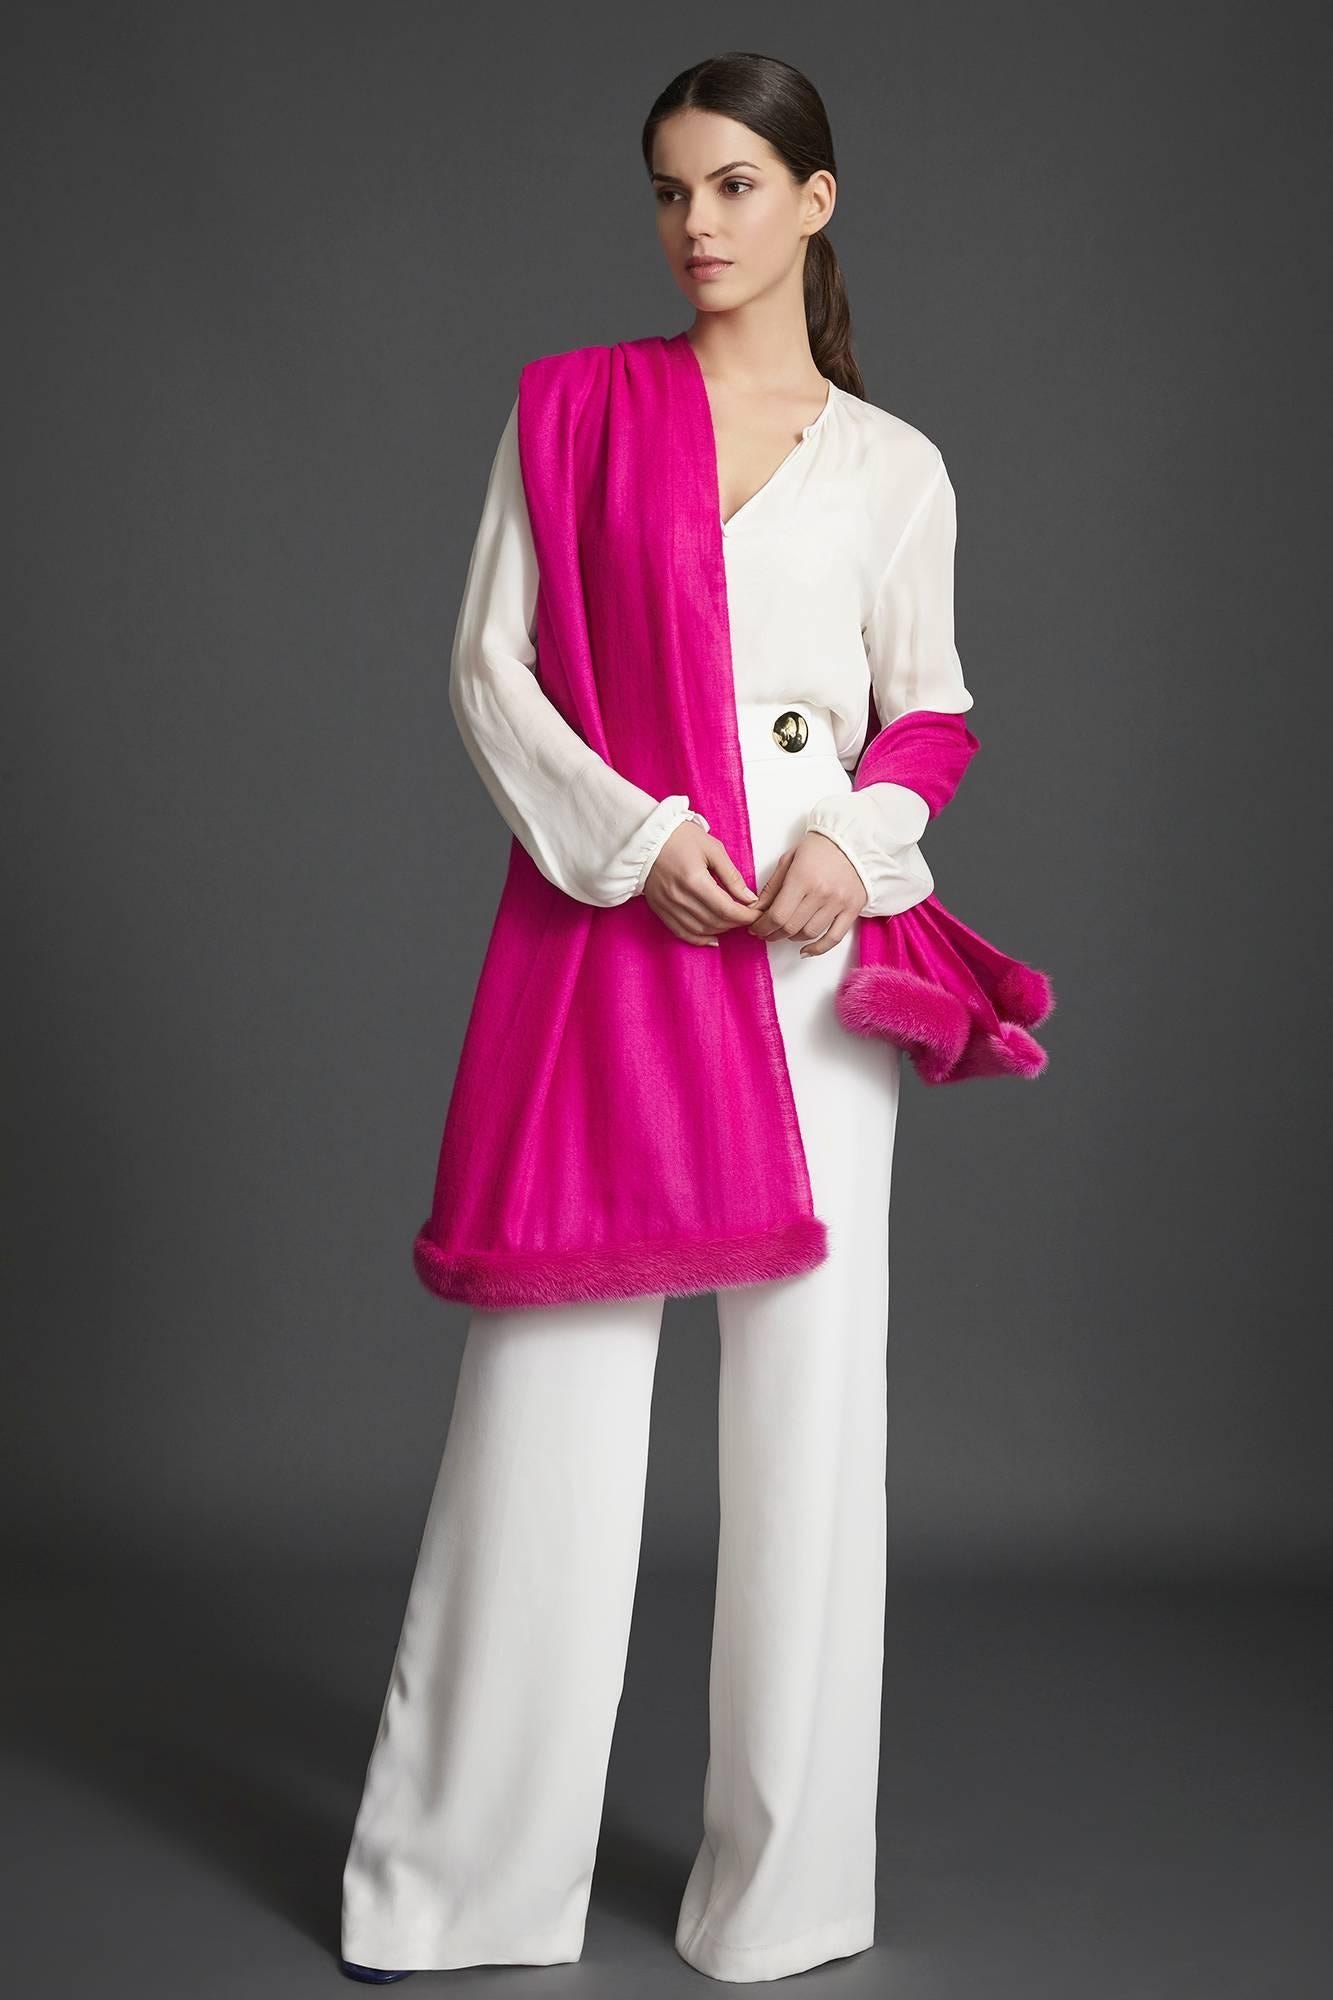 Women's or Men's Verheyen London Handwoven Mink Fur Trimmed Cashmere Shawl in Fuchsia Pink